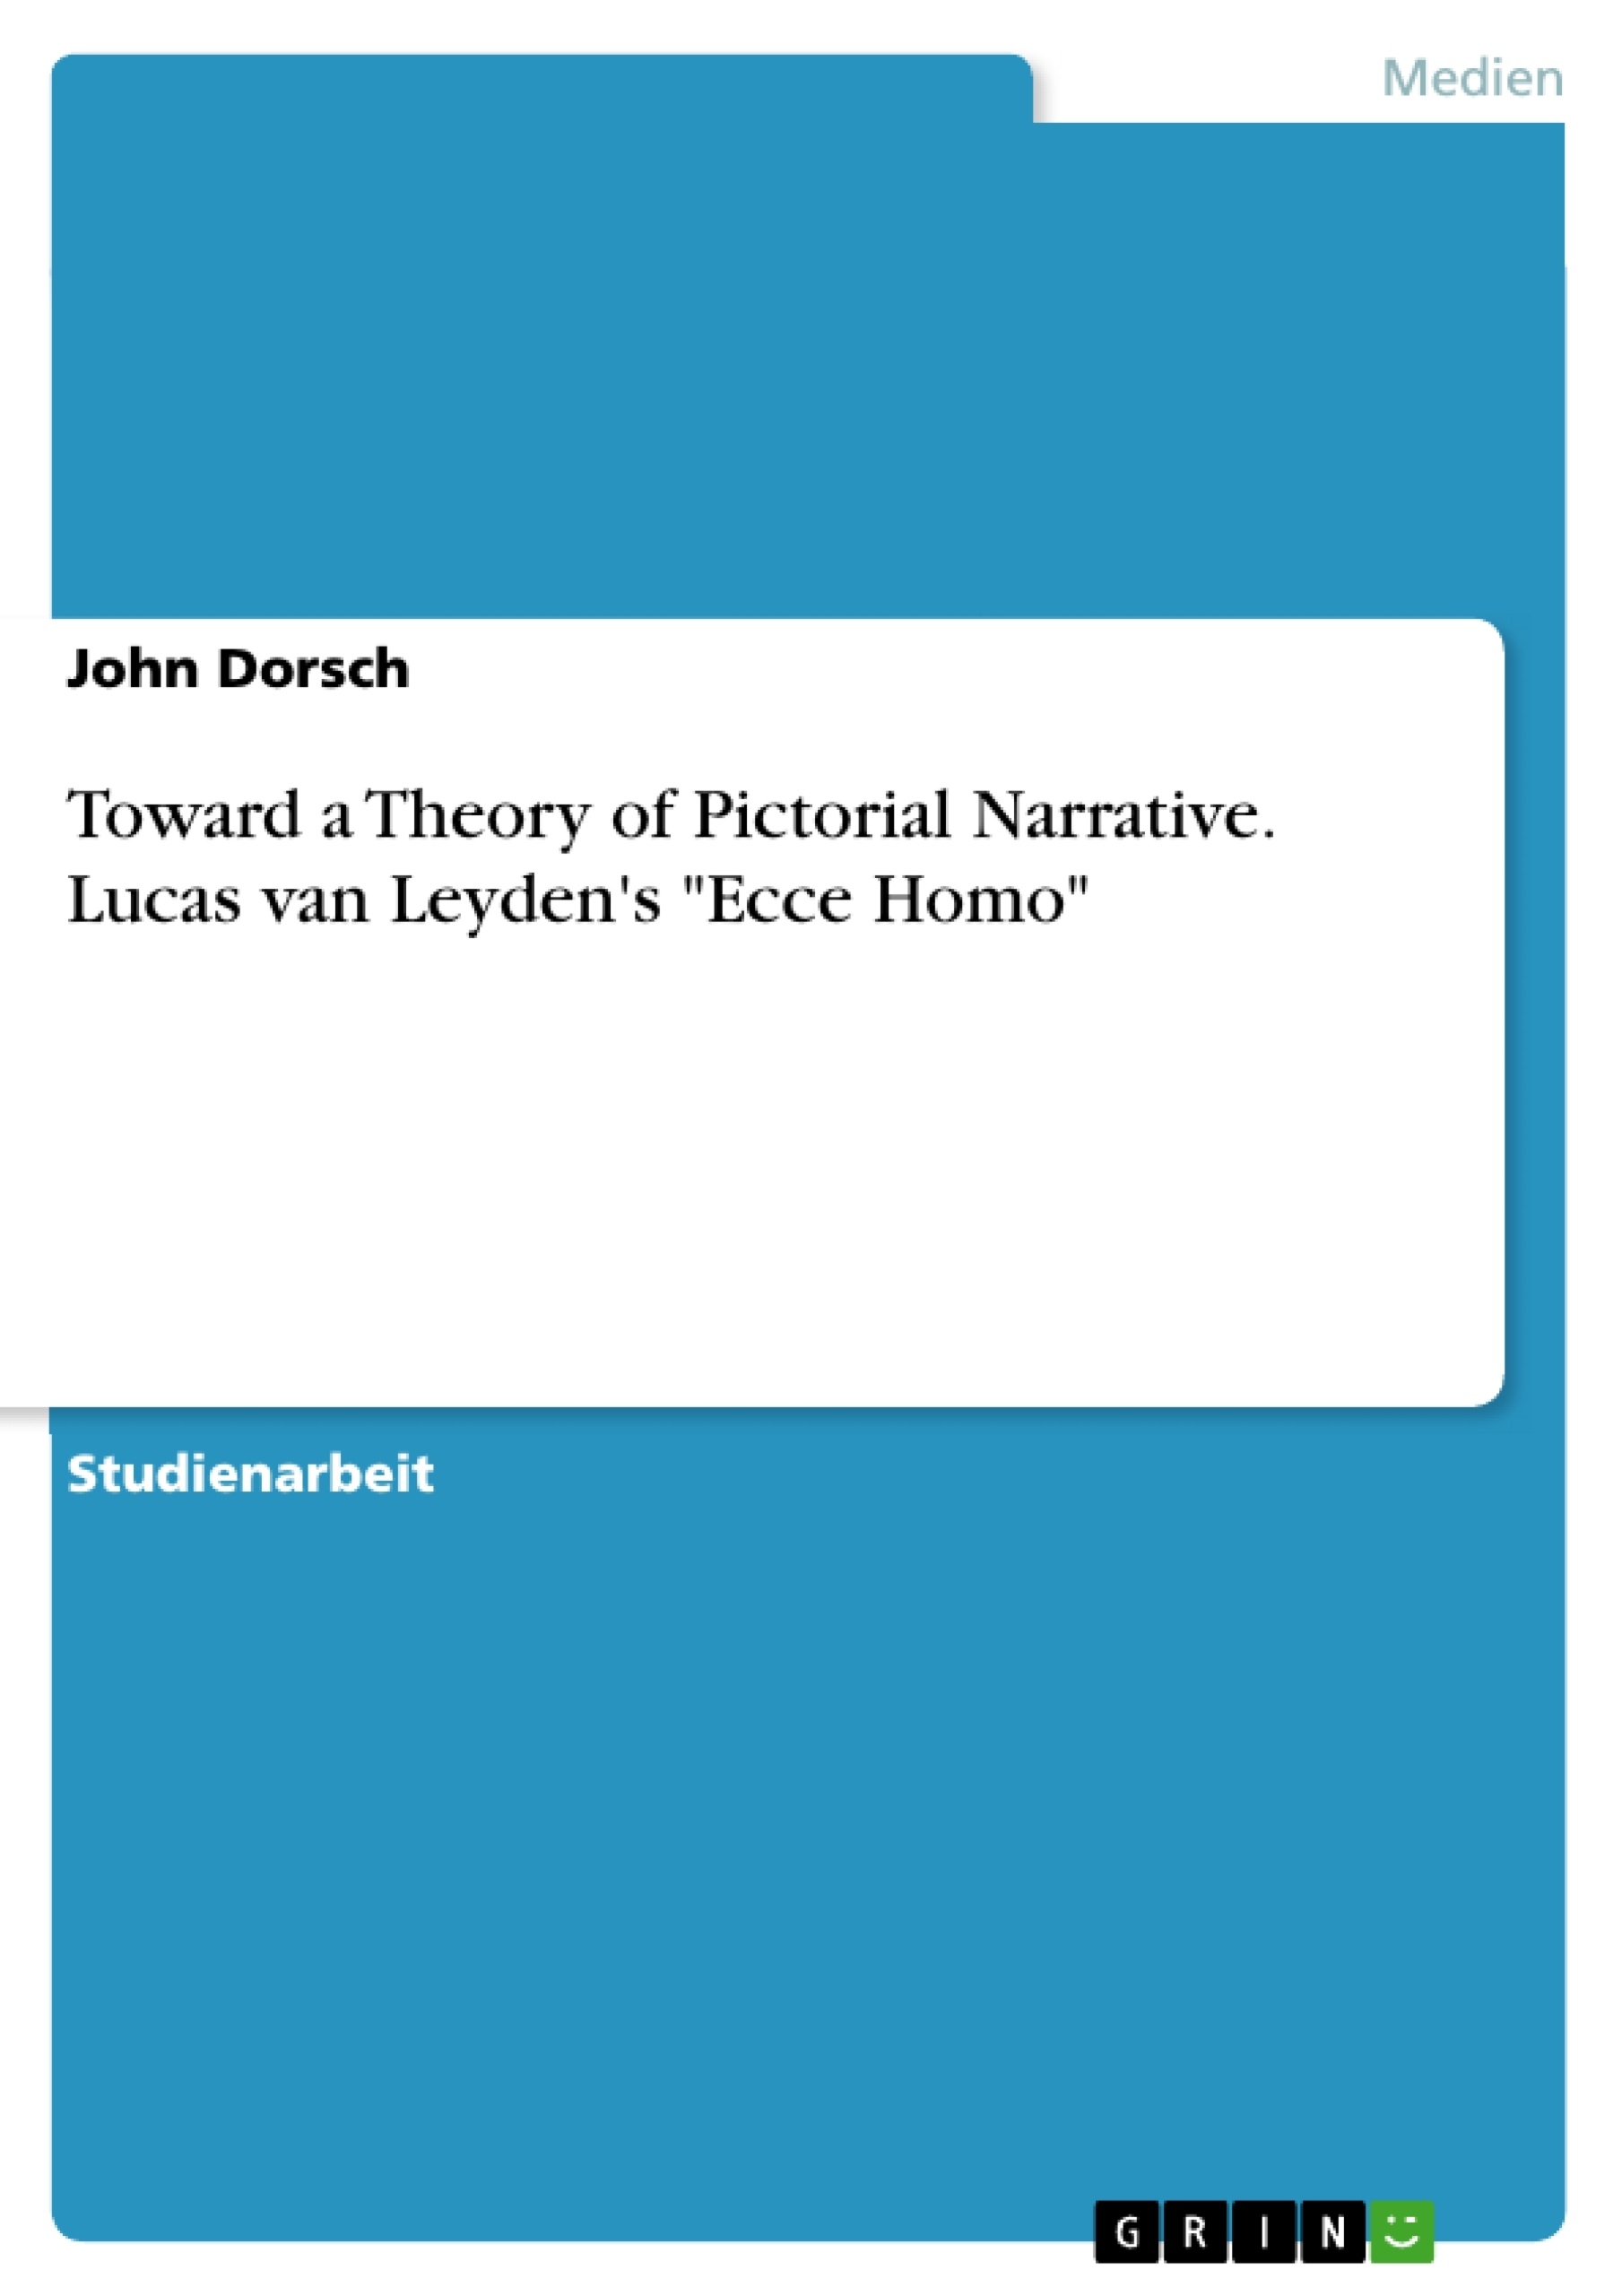 Titel: Toward a Theory of Pictorial Narrative. Lucas van Leyden's "Ecce Homo"